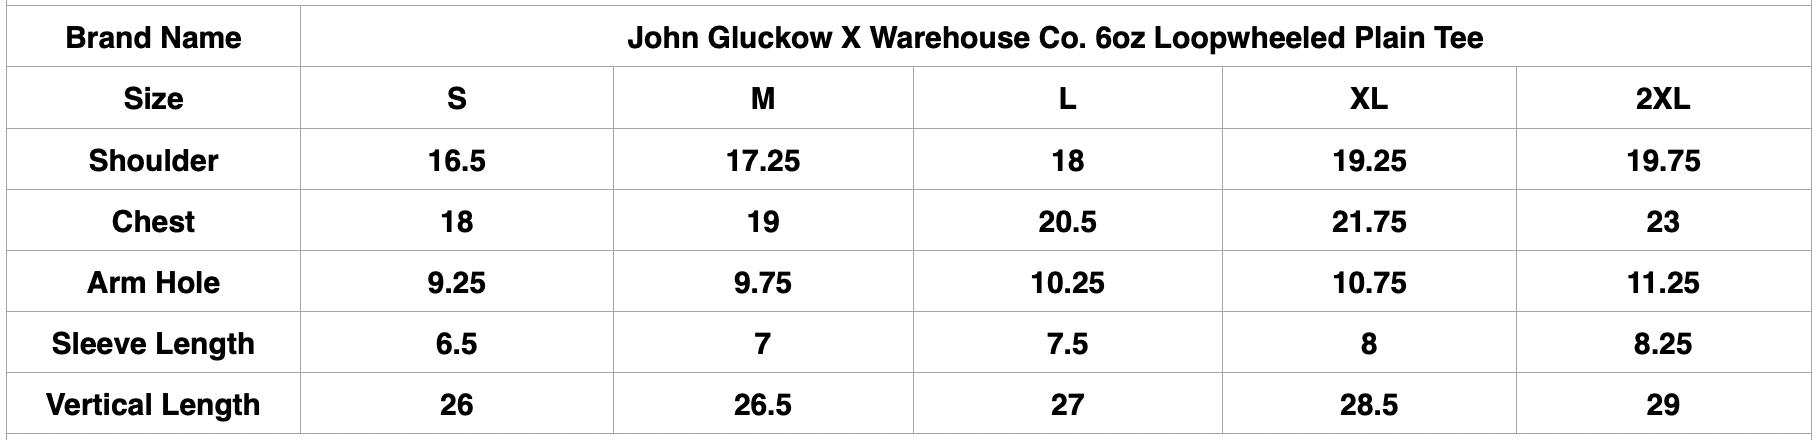 John Gluckow X Warehouse Co. 6oz Loopwheeled Plain Tee (Yellow)